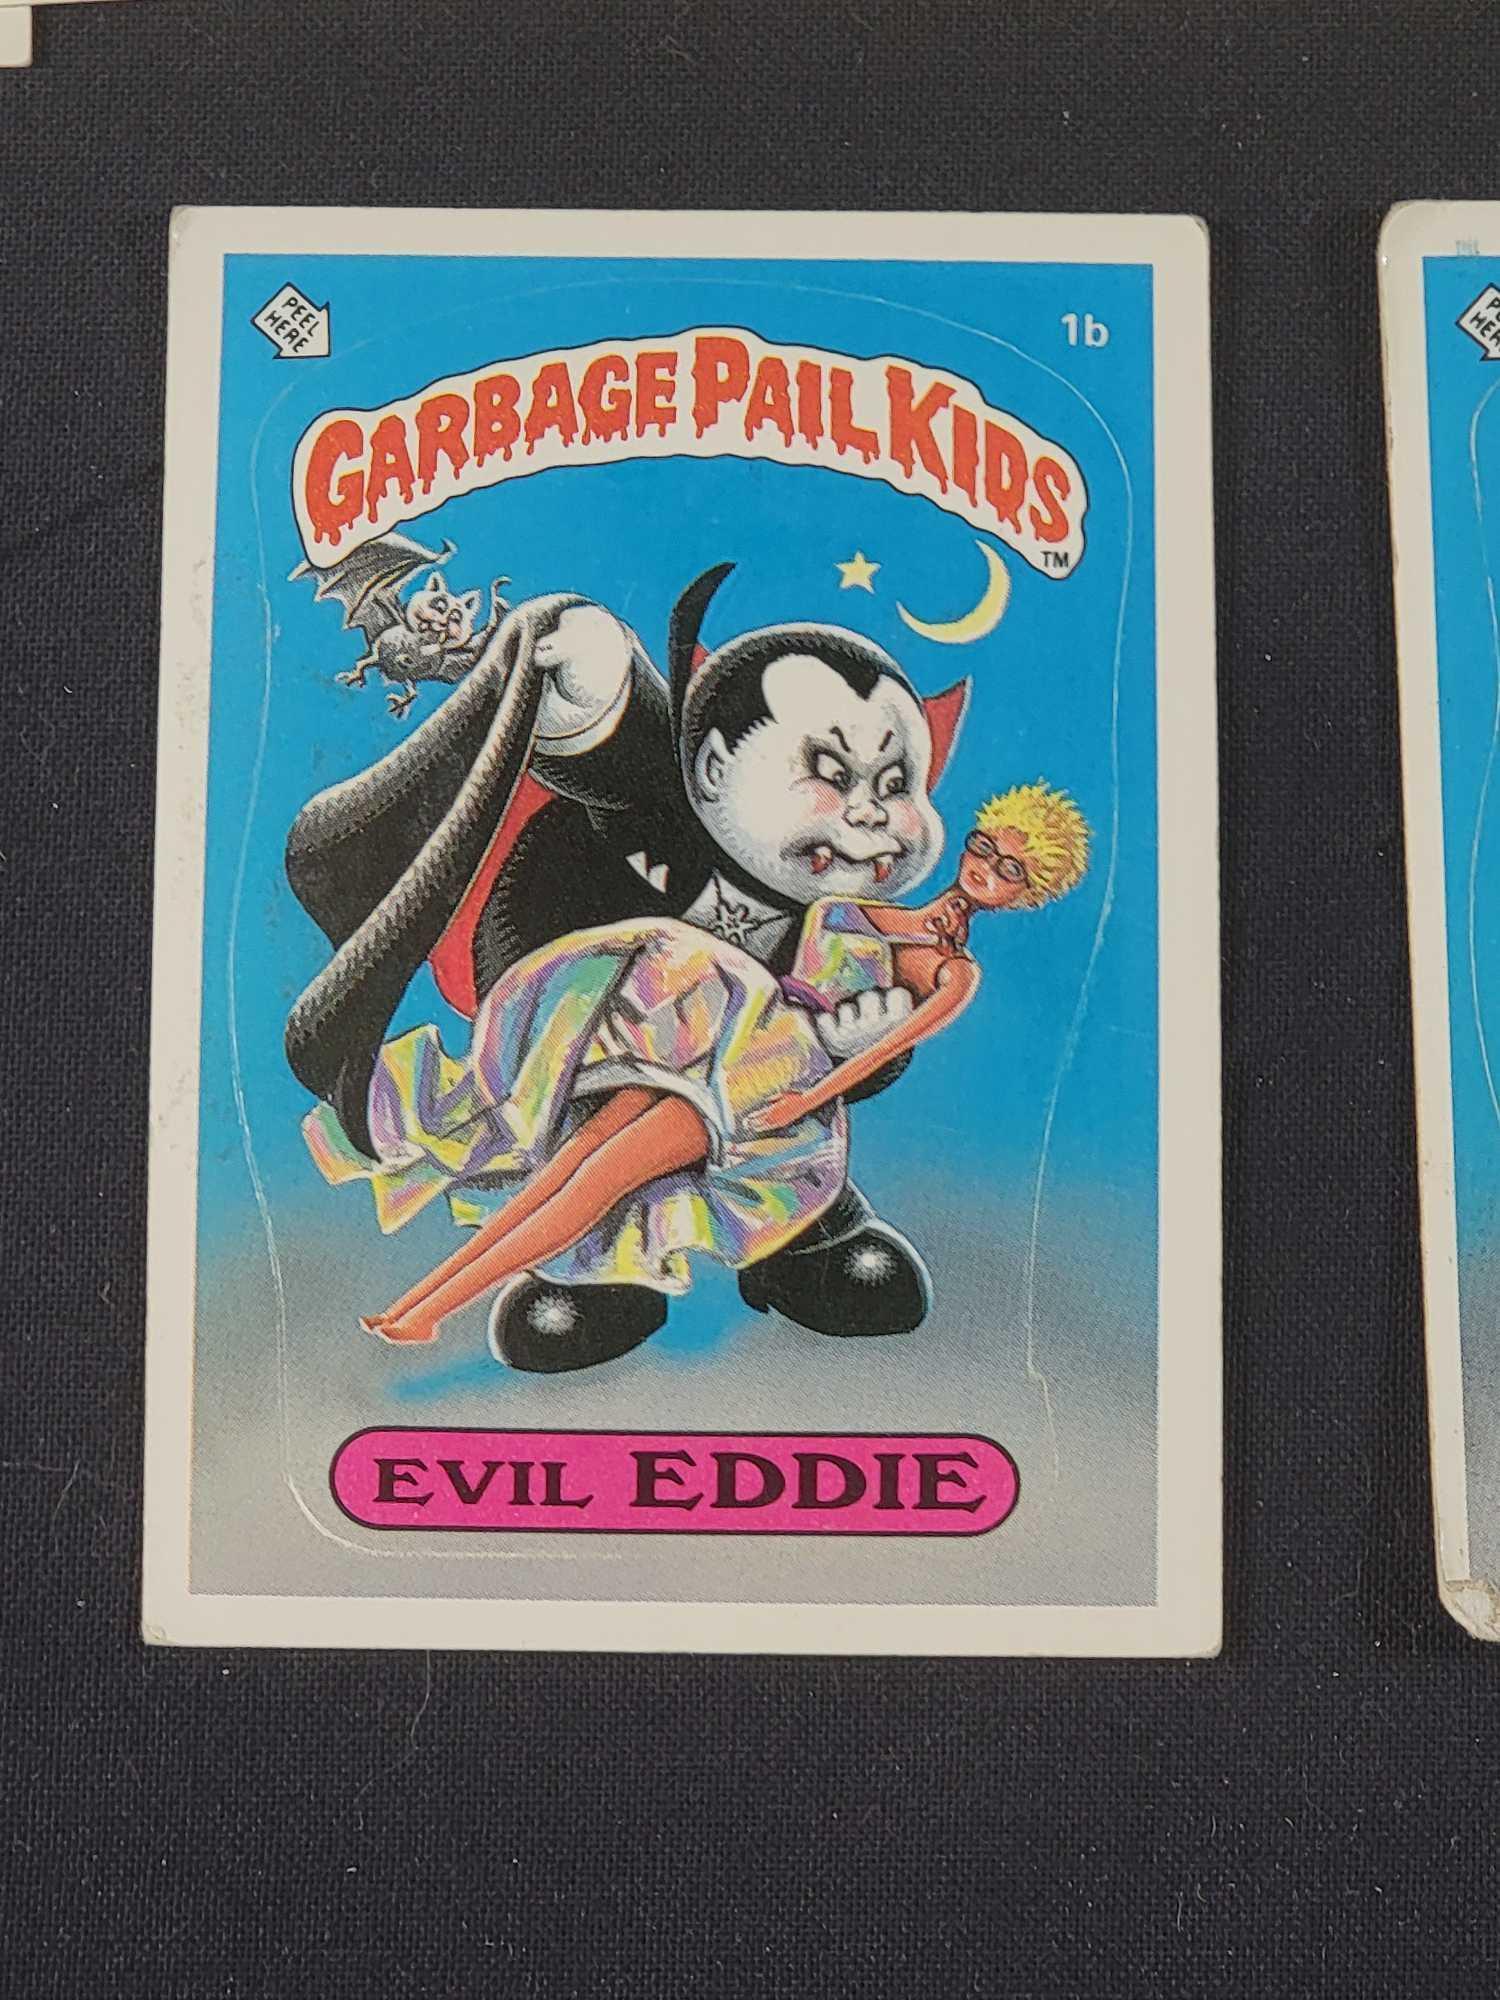 Vintage Garbage Pail Kids Packages Packs Series 1 70 Different Stickers